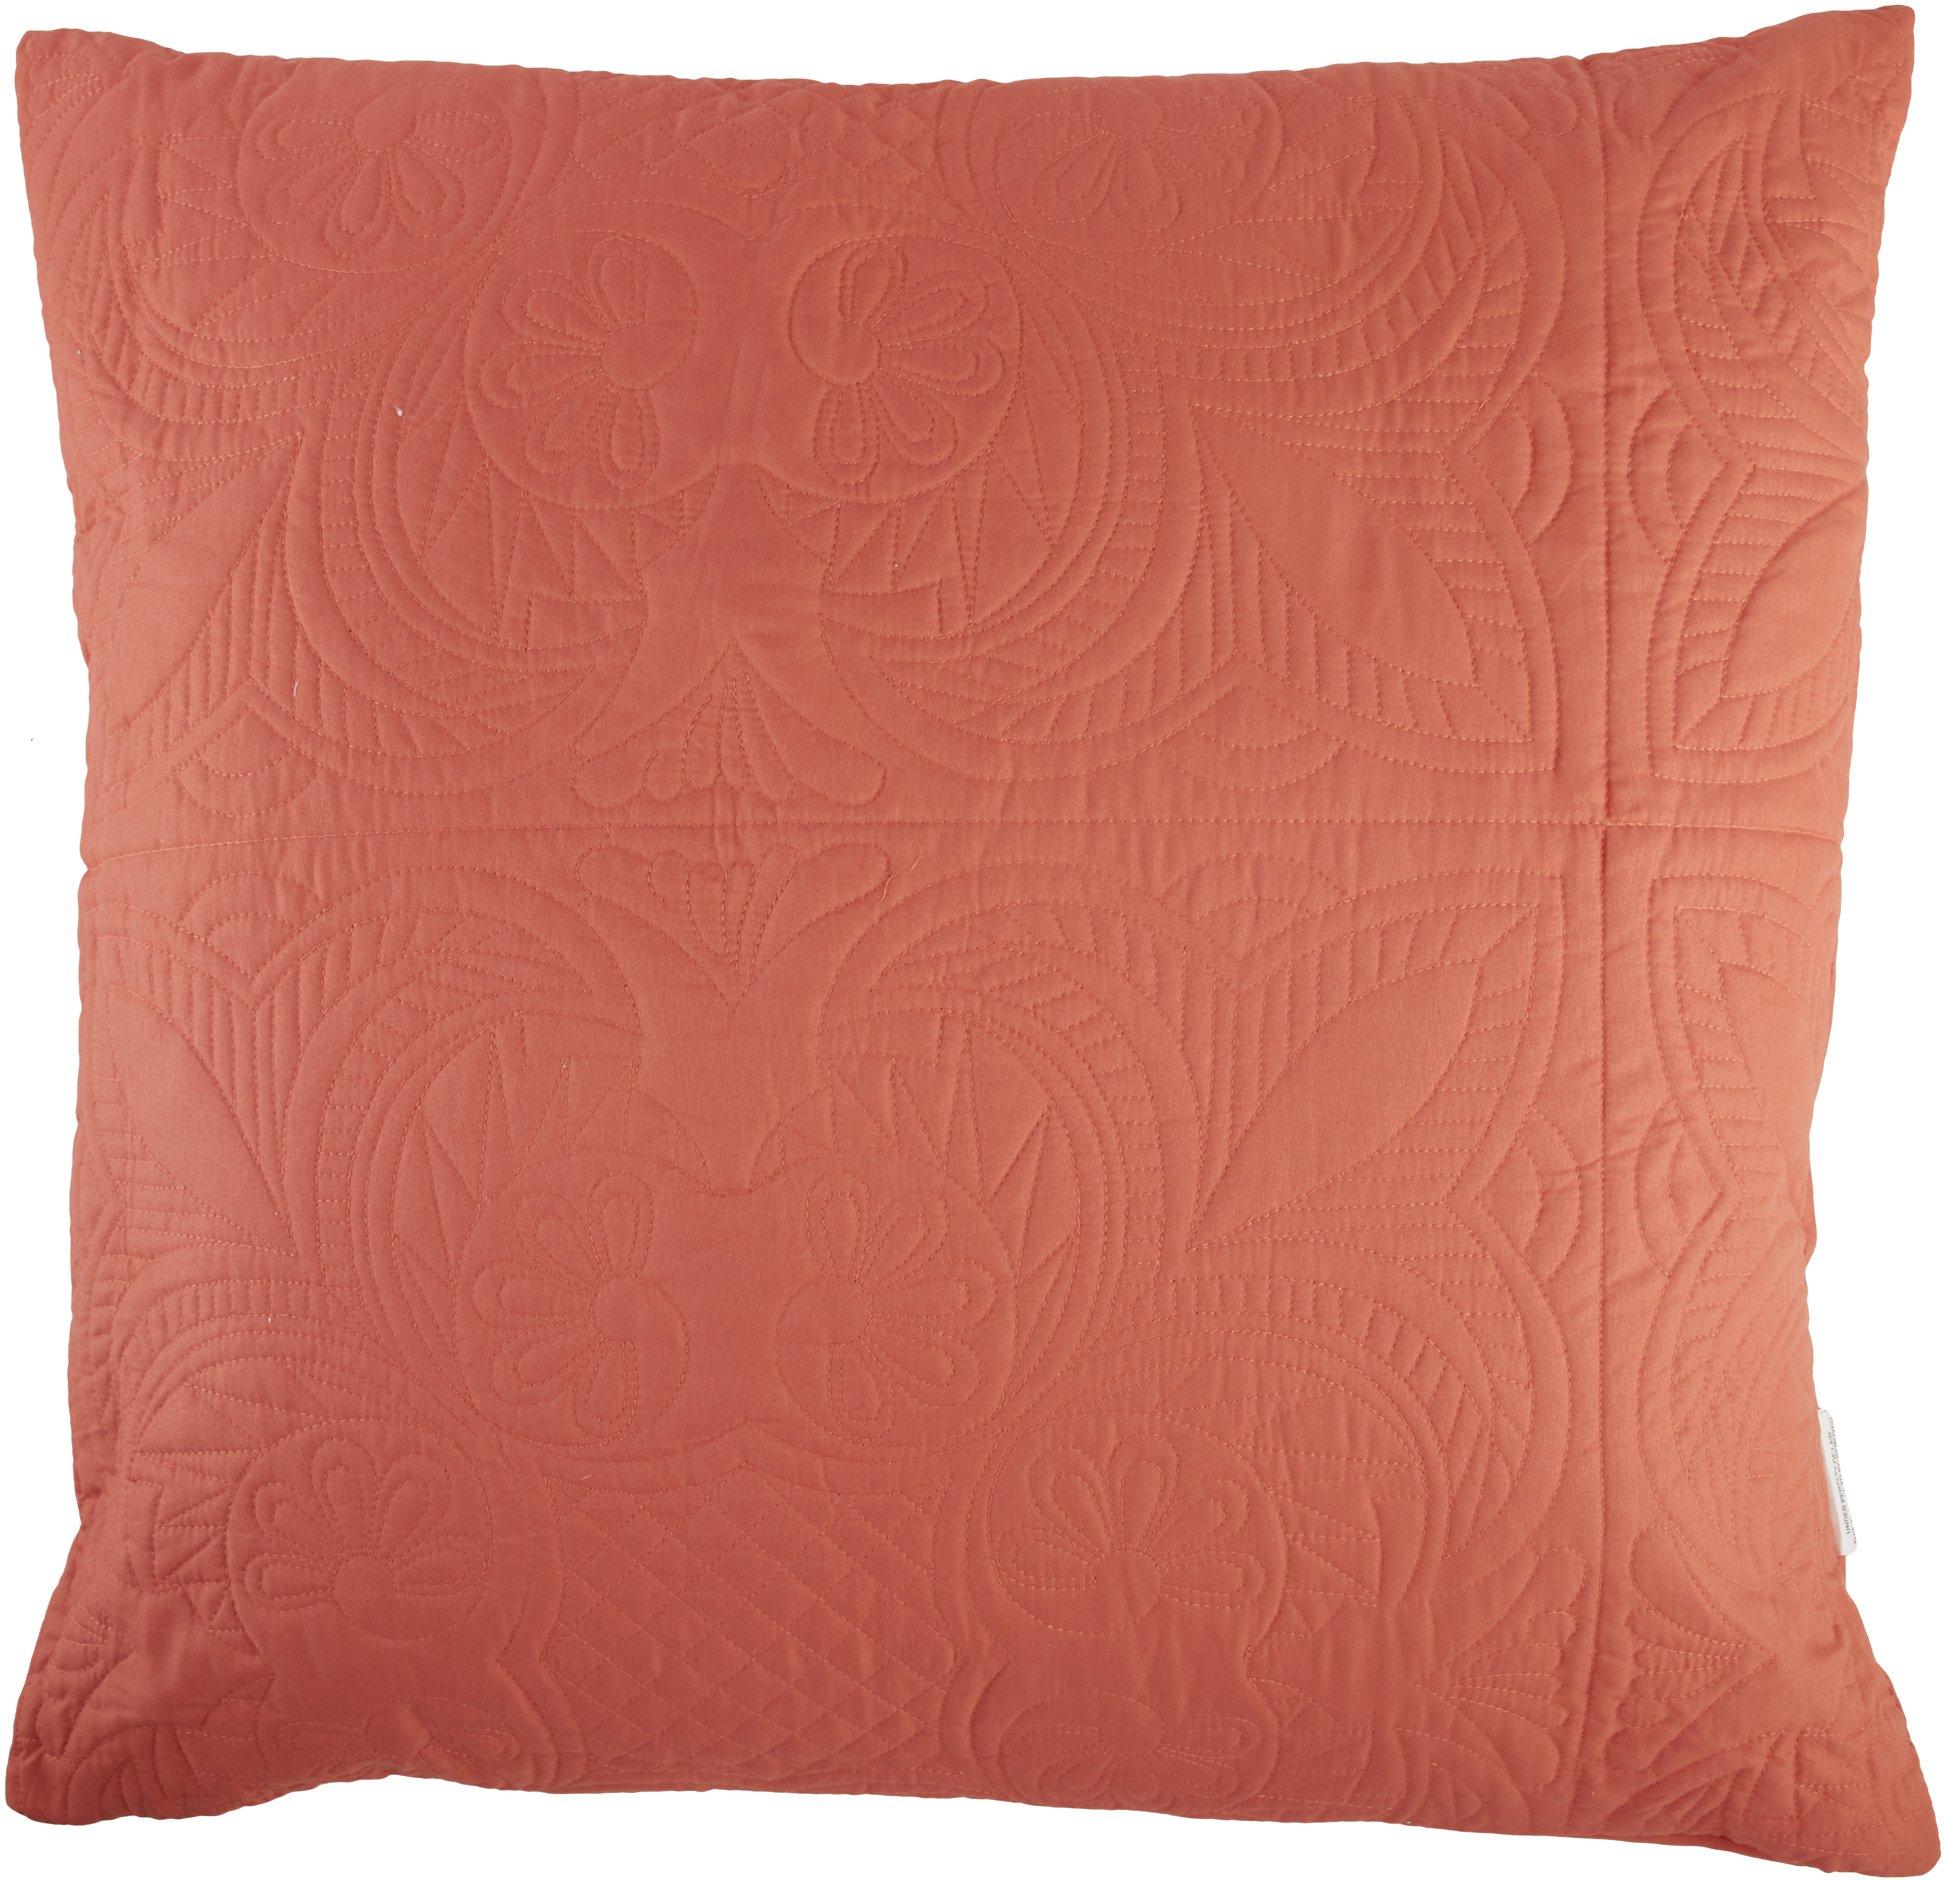 26x26 Venice Stitch Euro Pillow